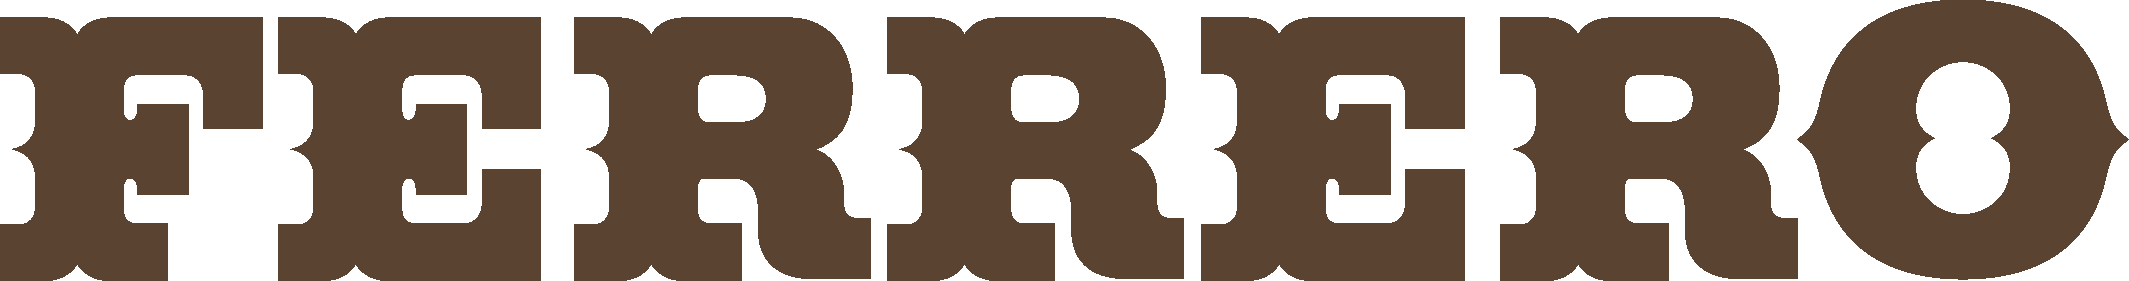 Ferrero Logo png